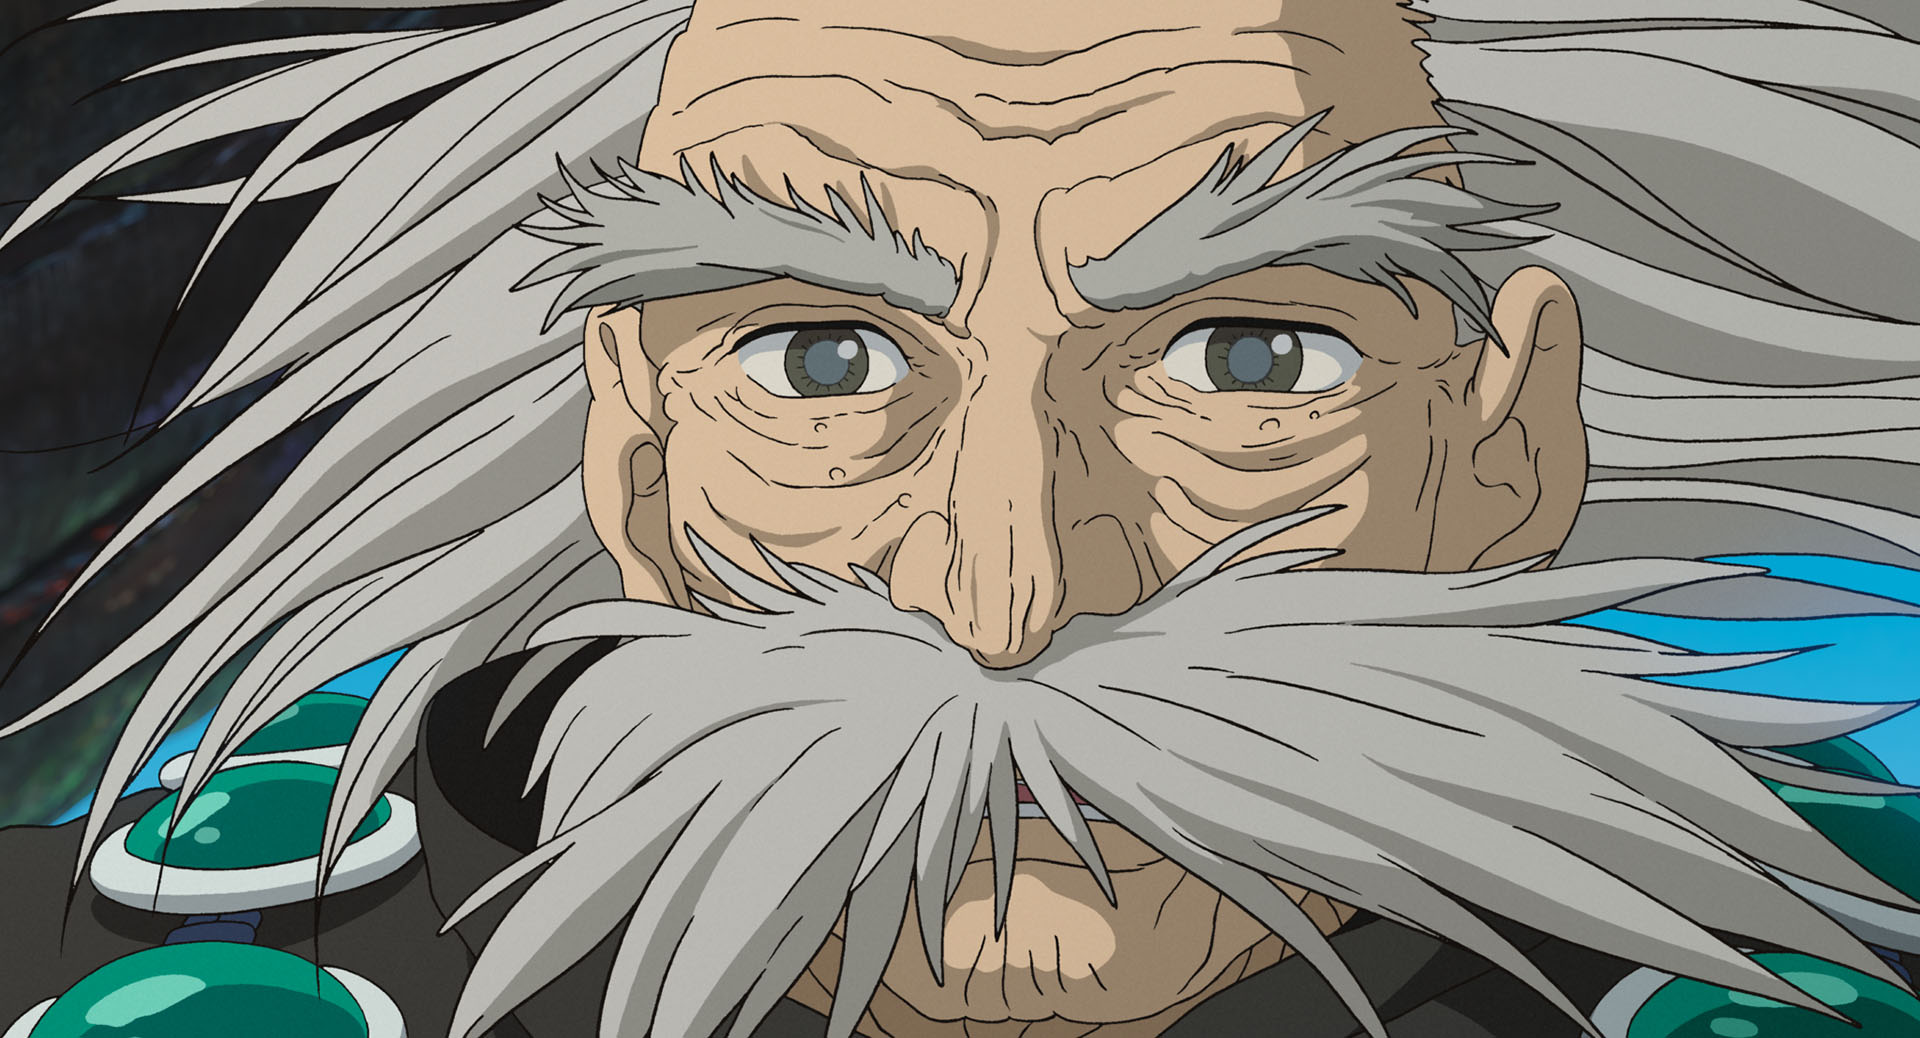 Boy And Heron Trailer: Hayao Miyazaki's Final Film To Open Toronto